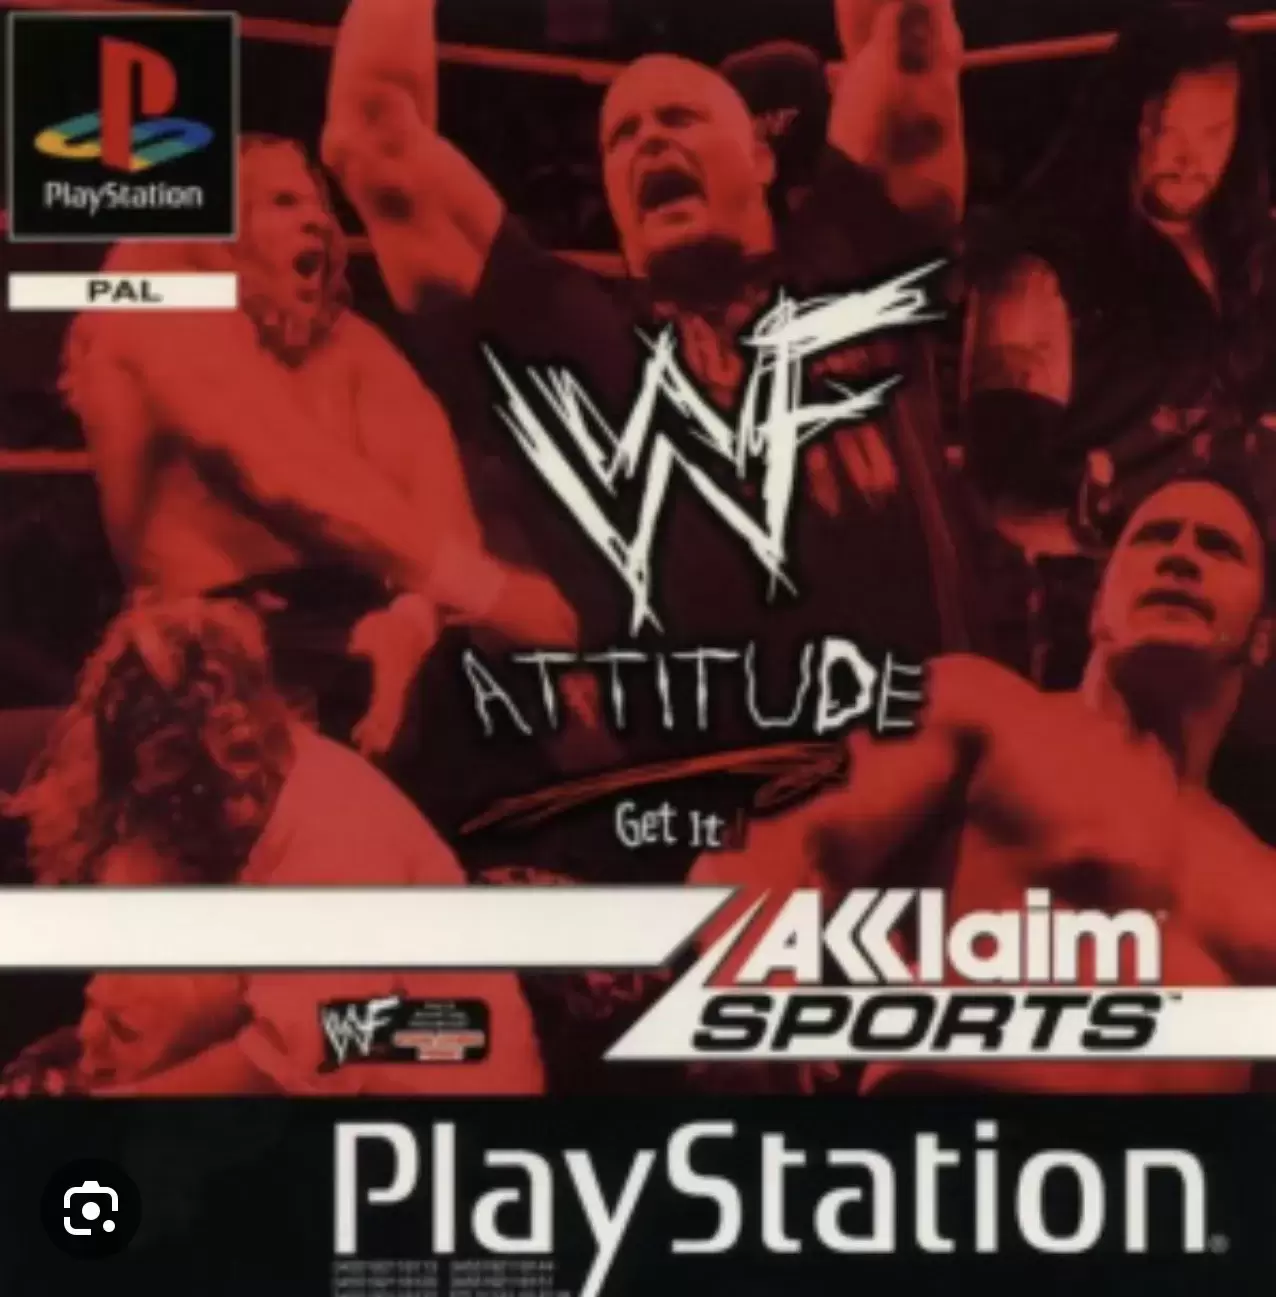 Playstation games - WWF Attitude Get It